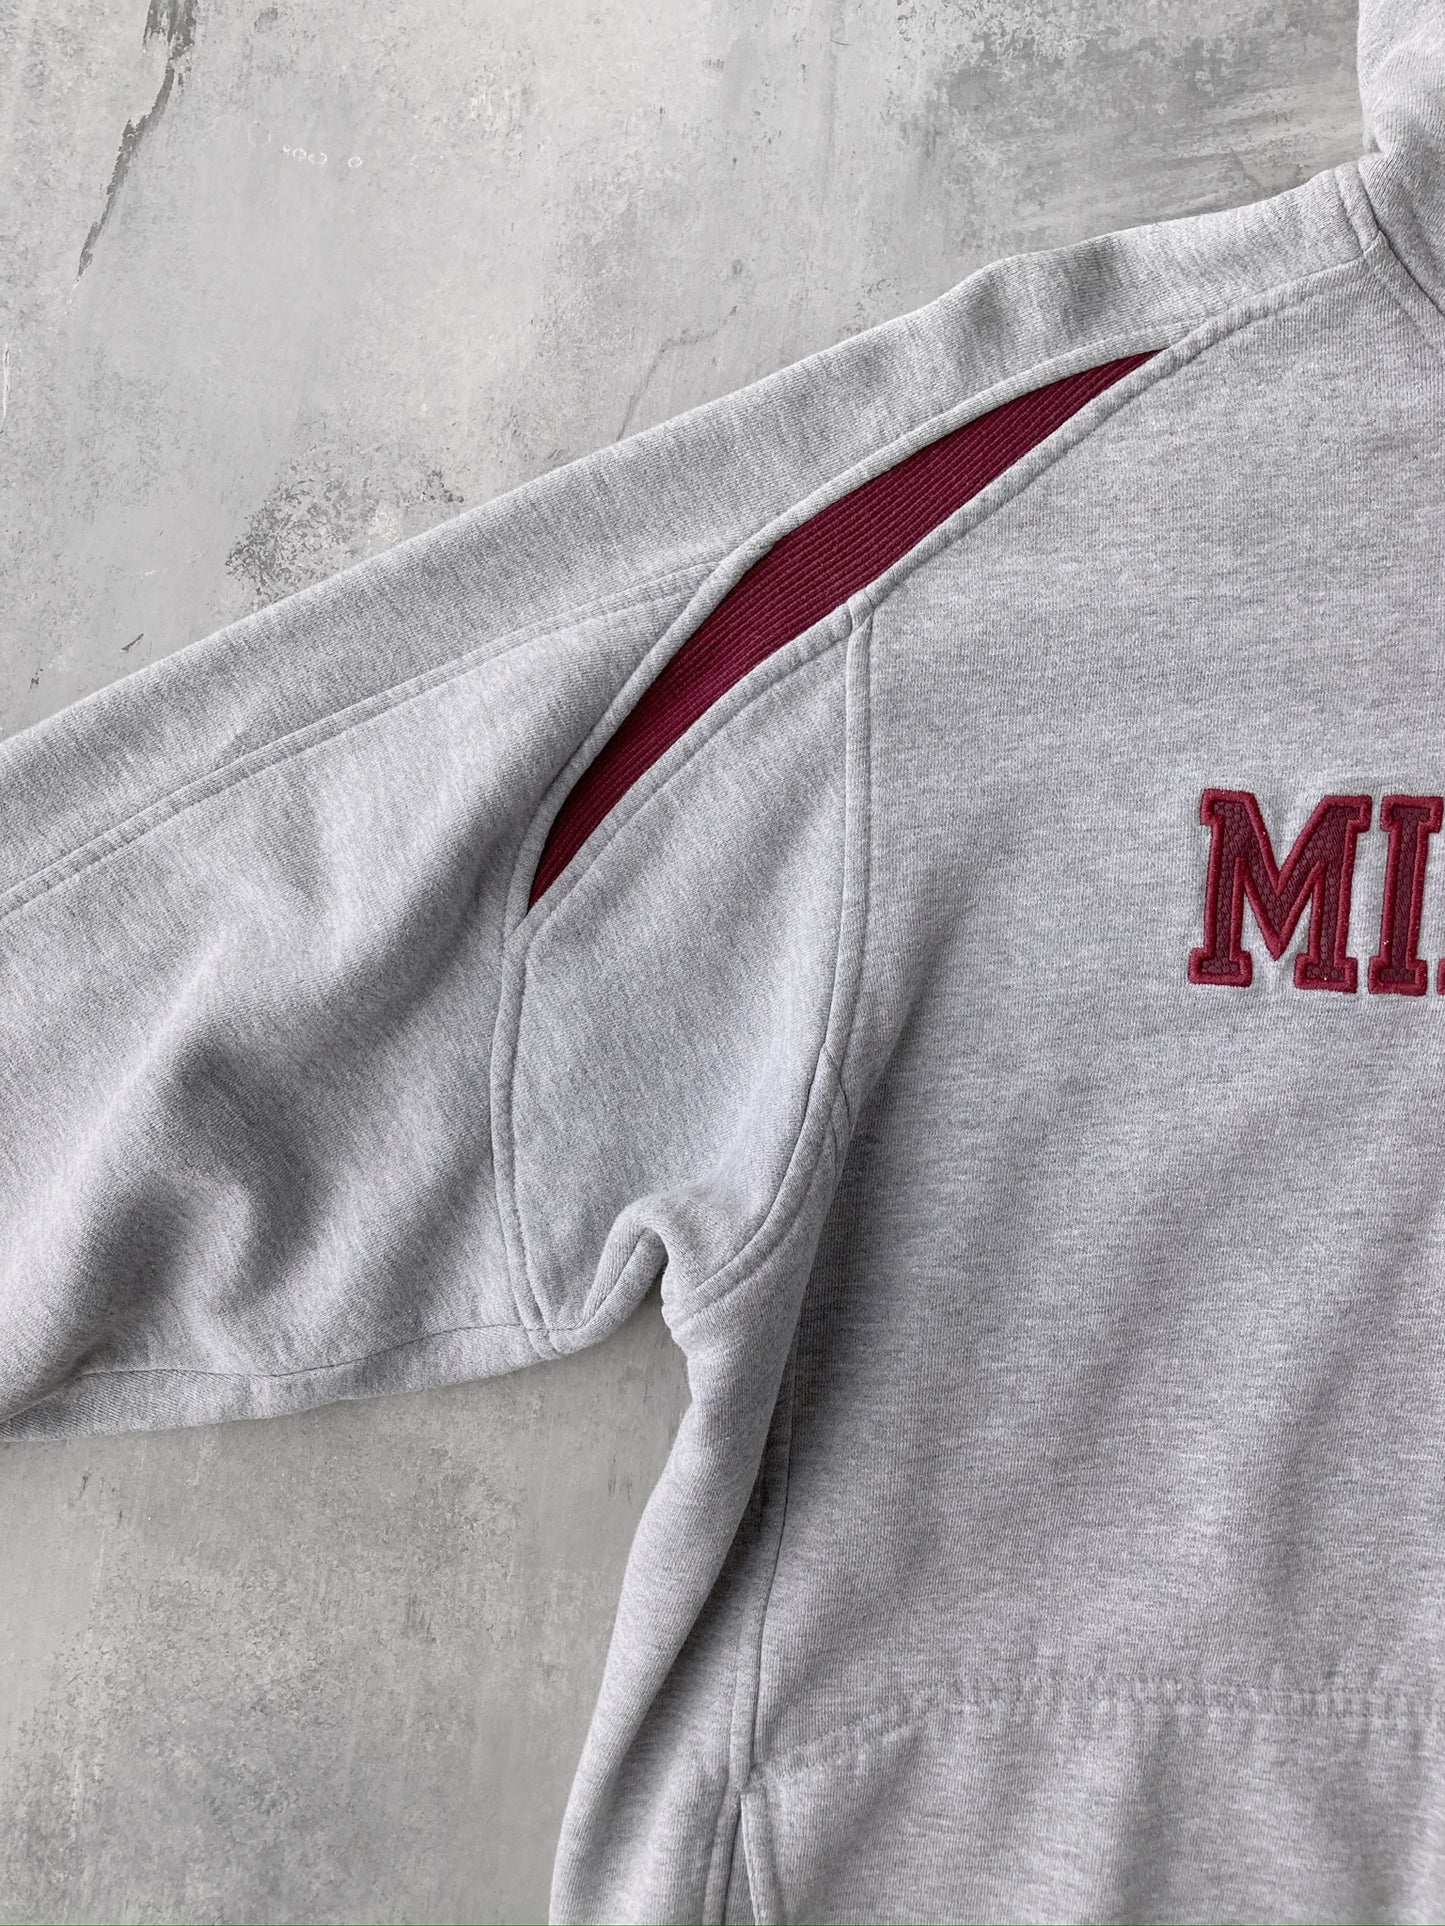 University of Minnesota Nike Hoodie 00's - Medium